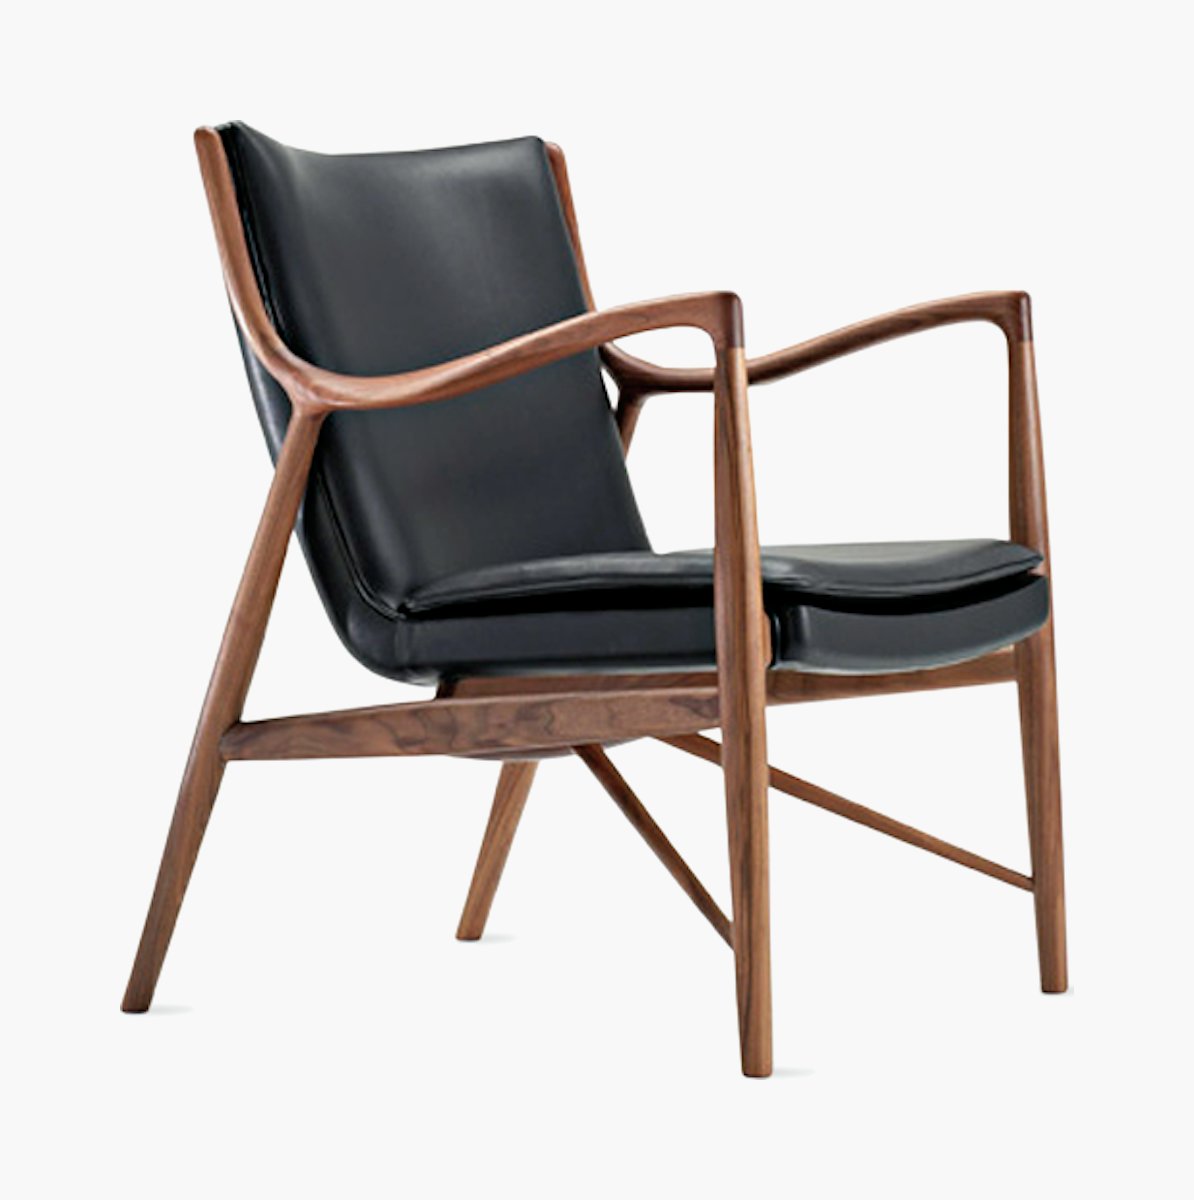 Model 45 Chair